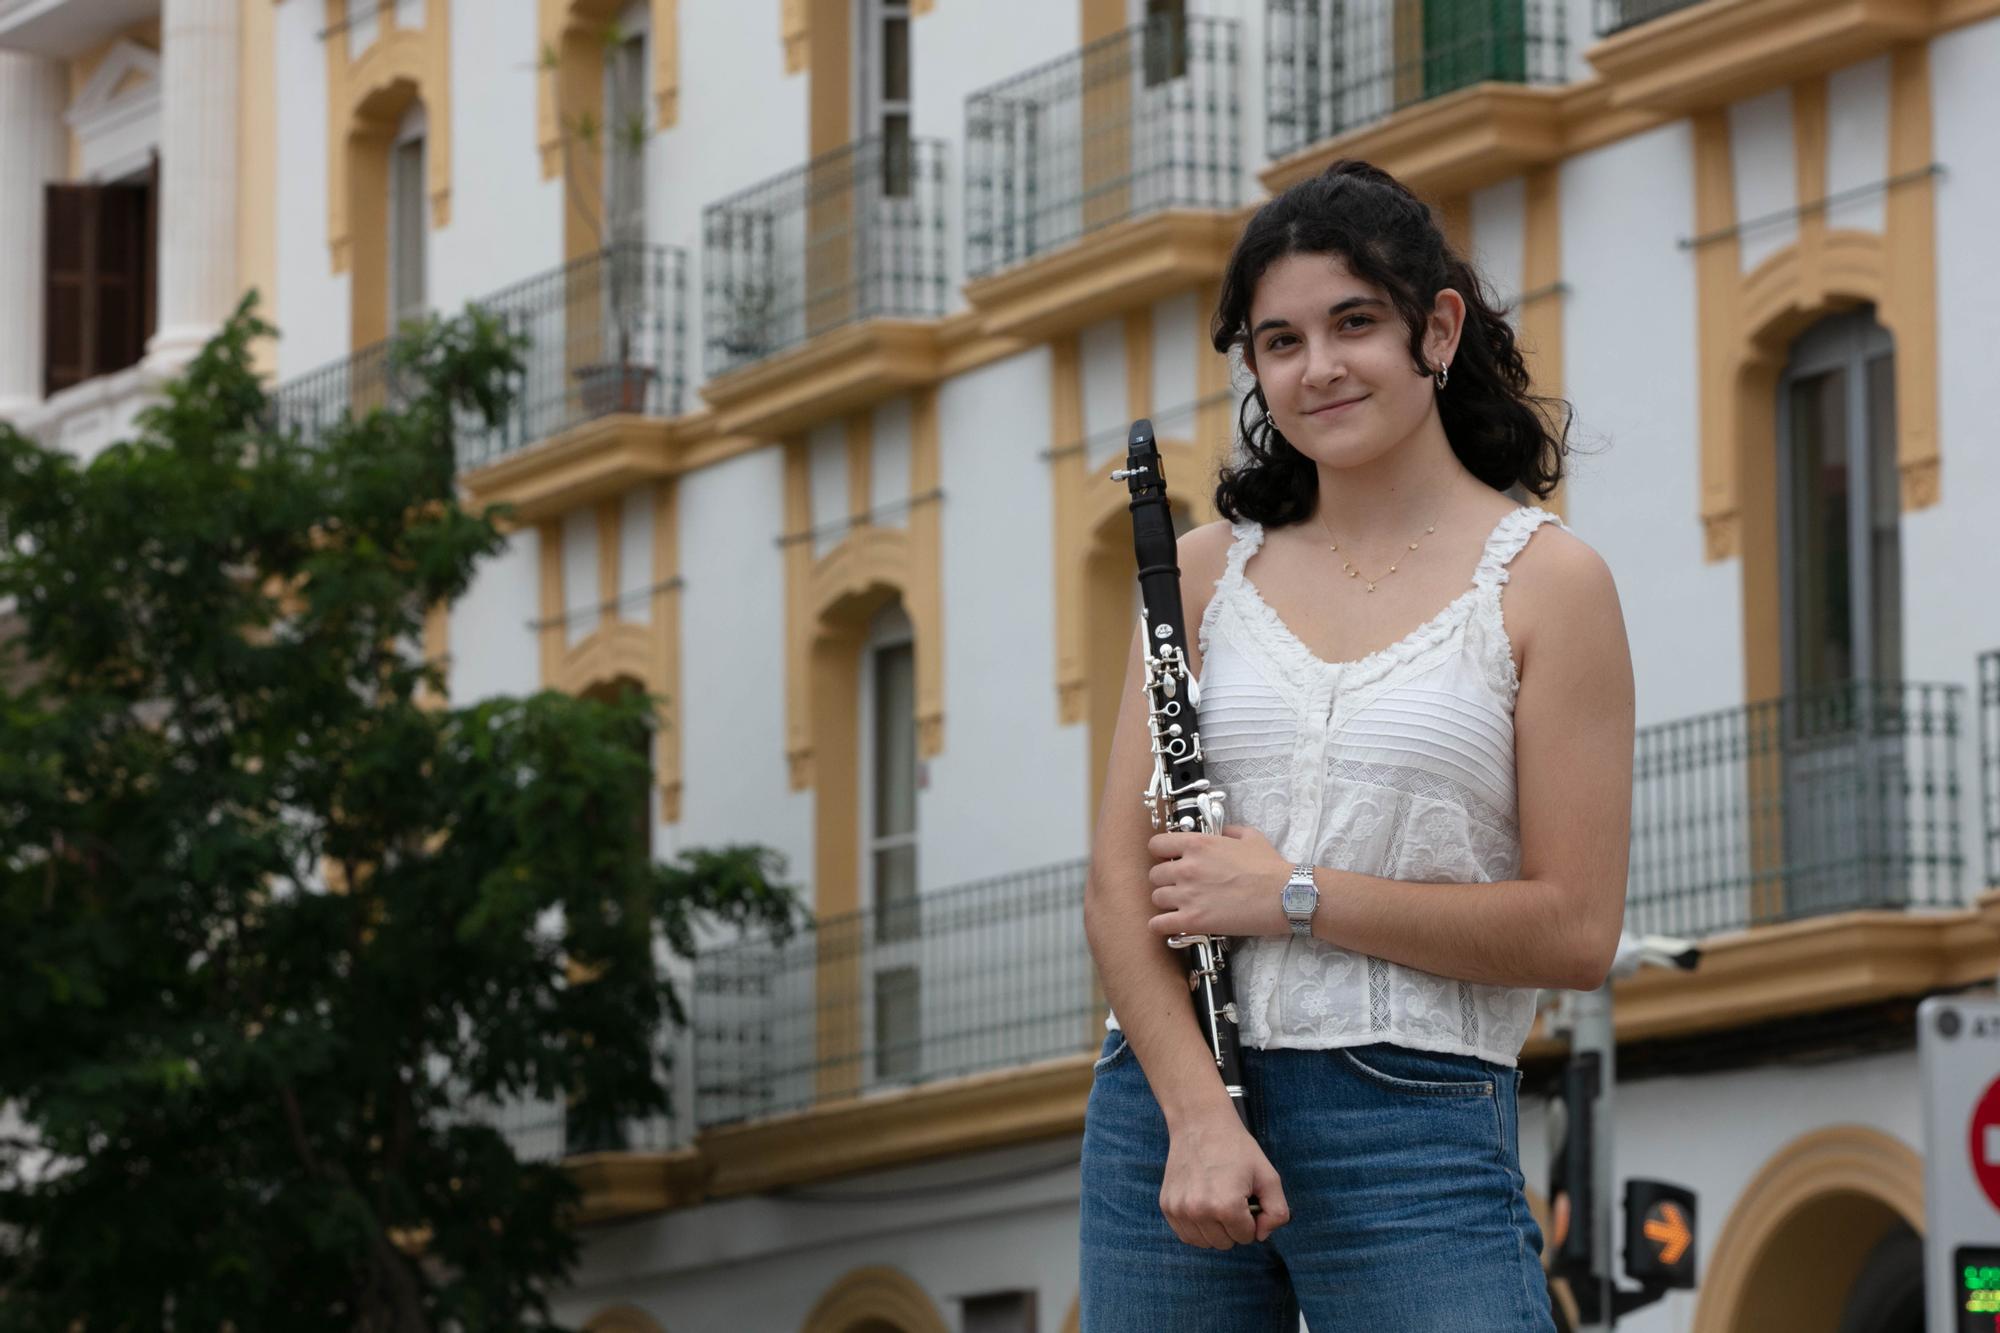 La clarinetista Irene Tur Tur tiene 18 años.